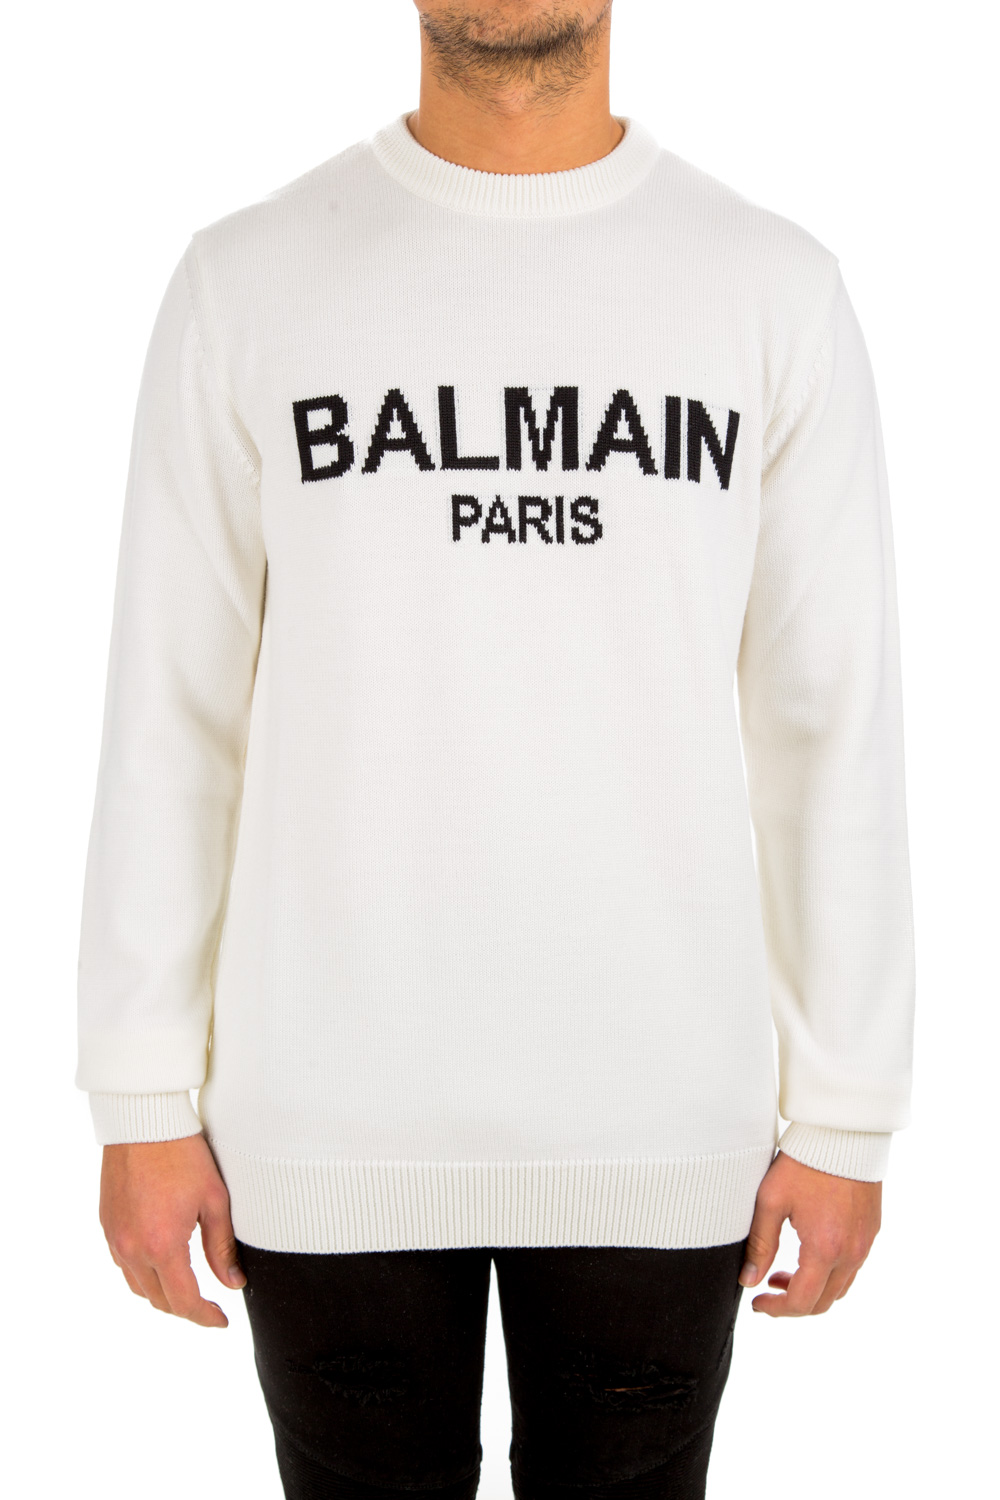 Balmain Balmain Paris Sweater Credomen